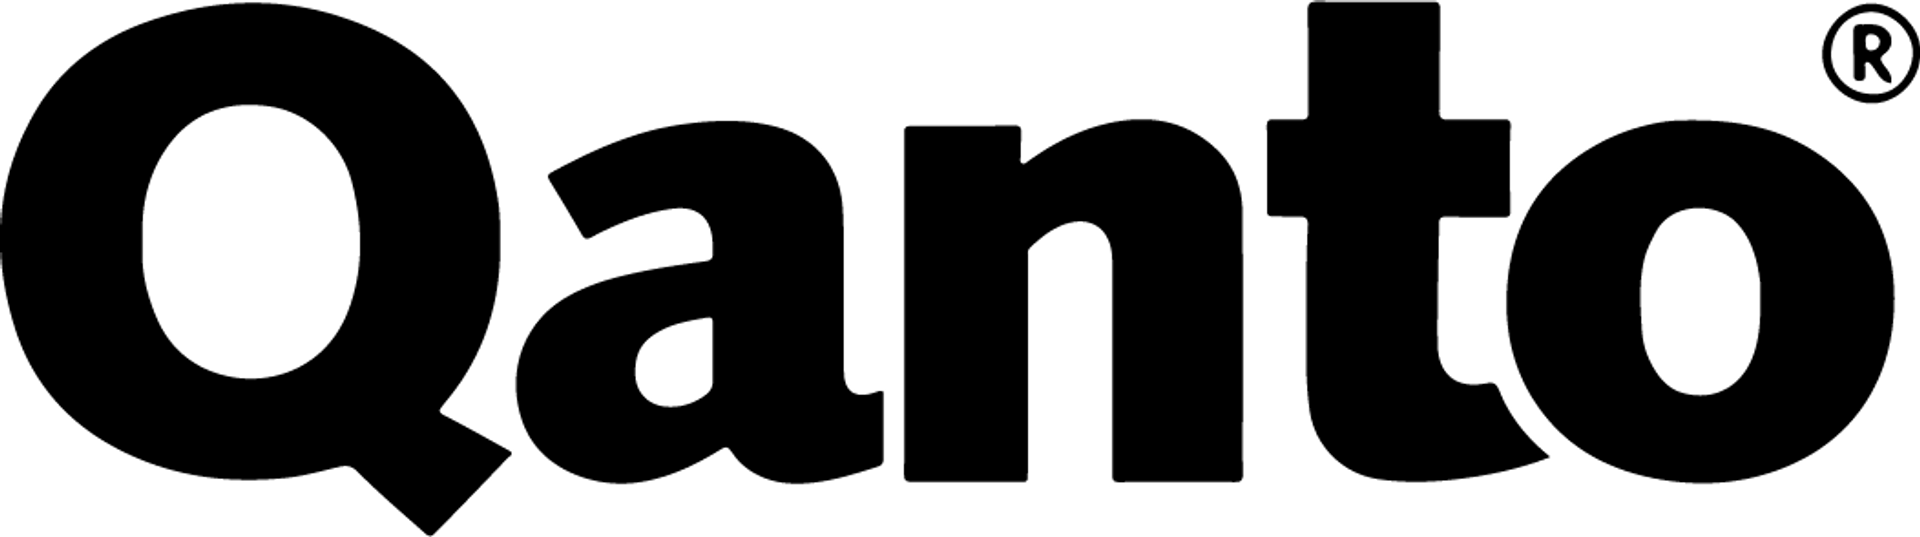 ASTUR & QANTO logo of current catalogue